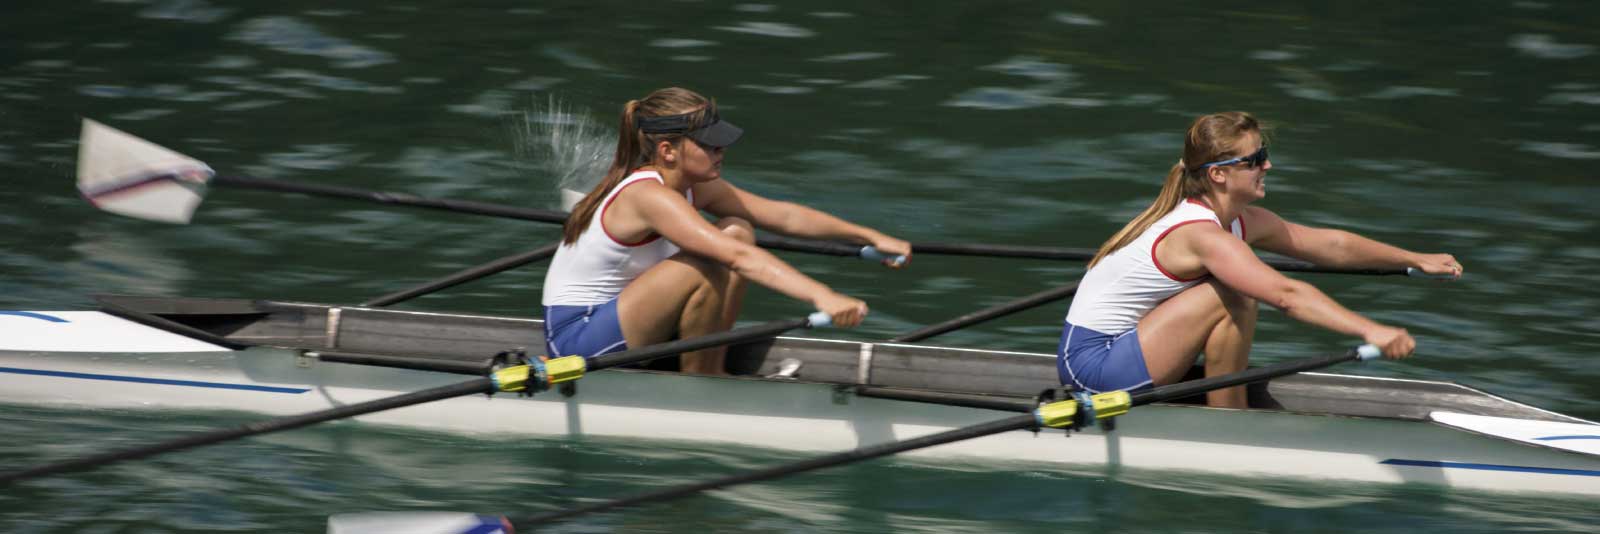 Women's rower